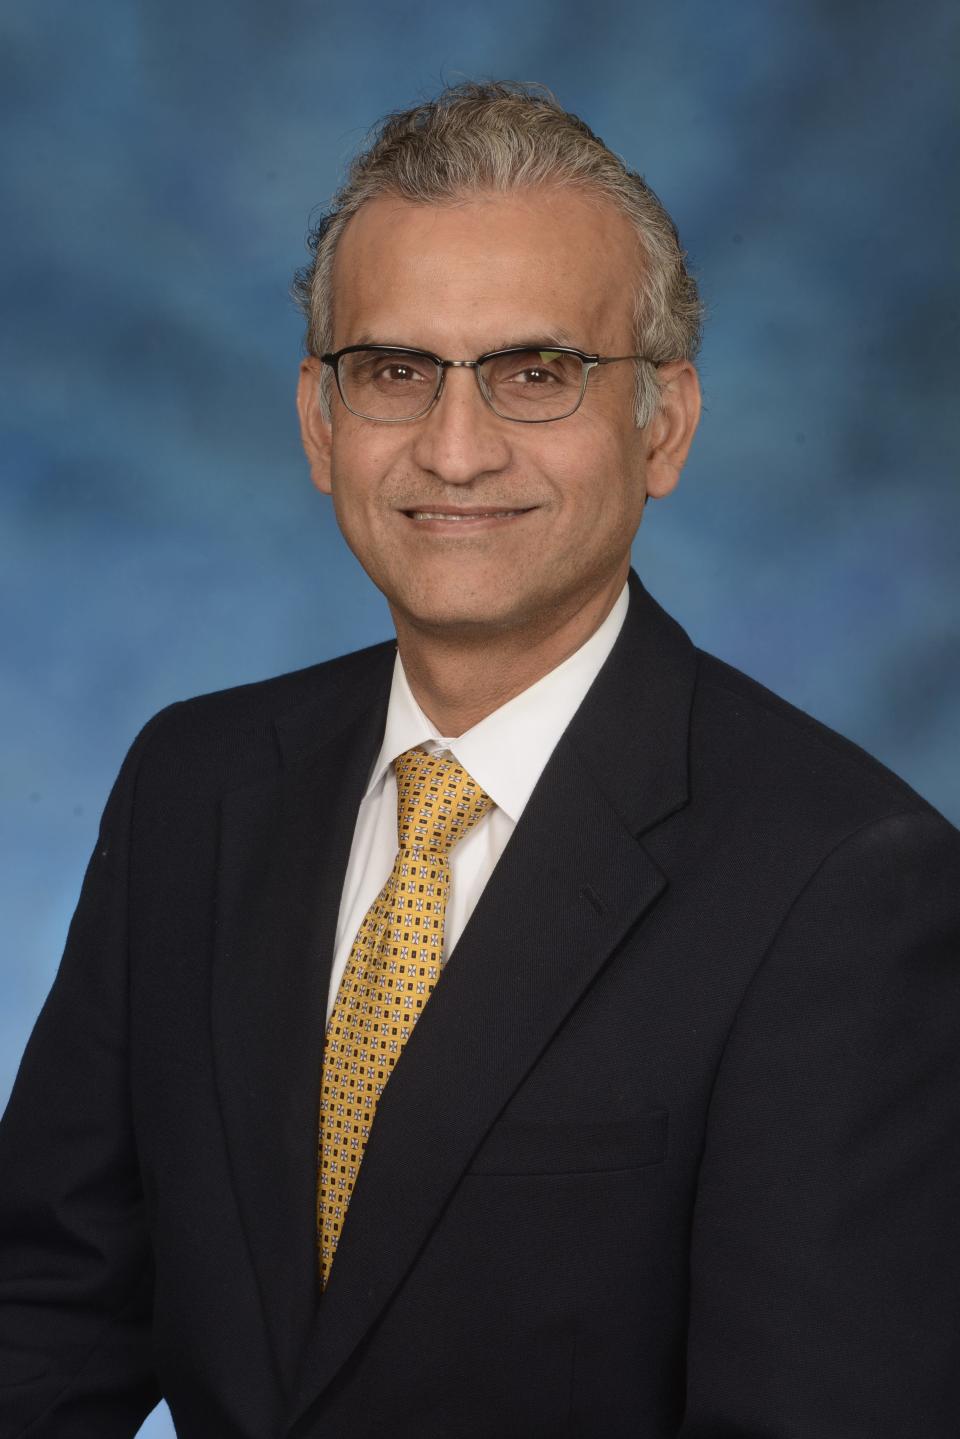 Dr. Muhammad Mohiuddin directs the program in cardiac xenotransplantation at the University of Maryland School of Medicine.